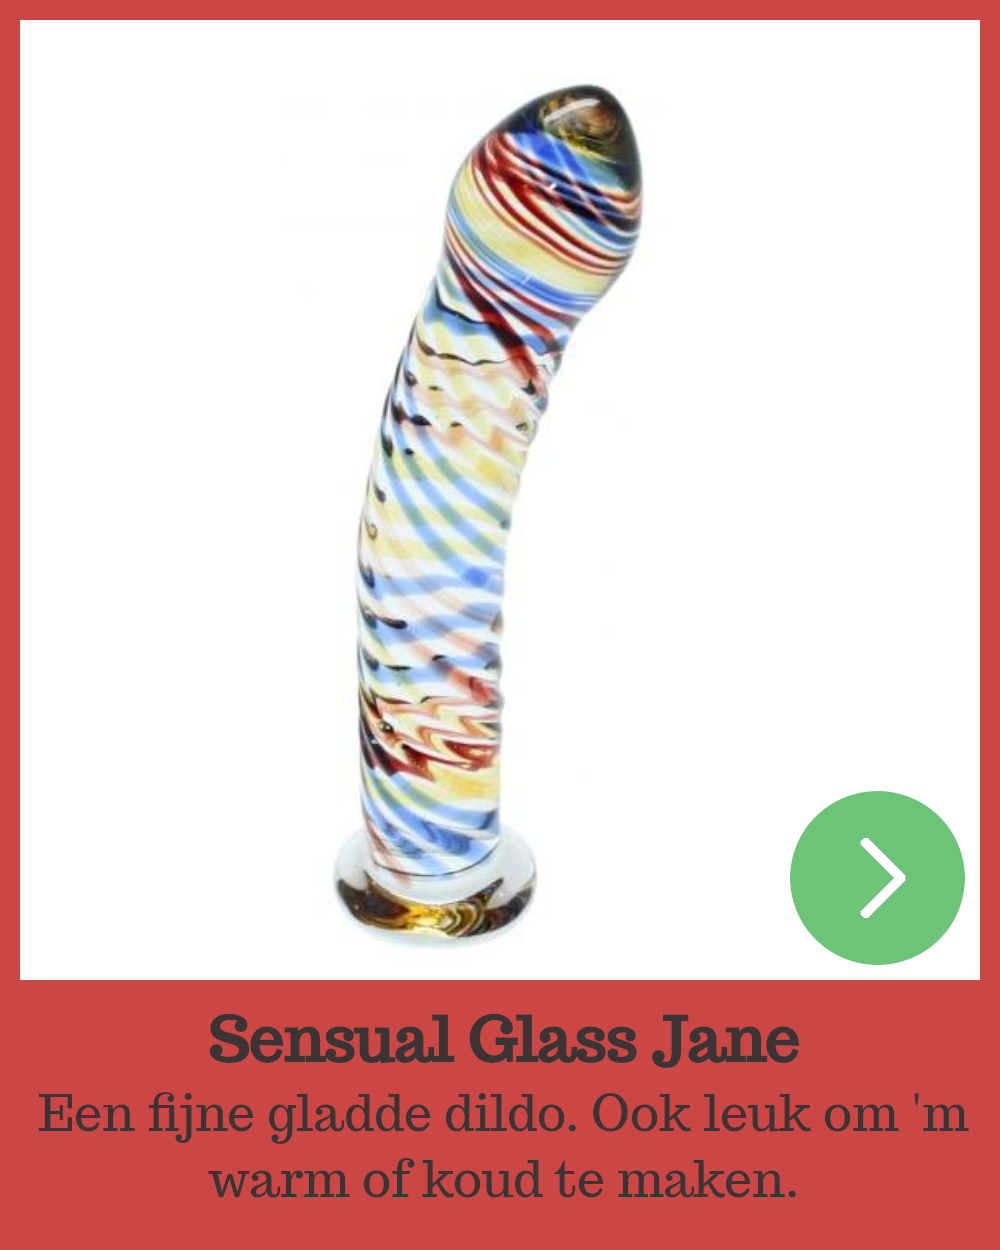 Sensual Glass Jane, glazen dildo